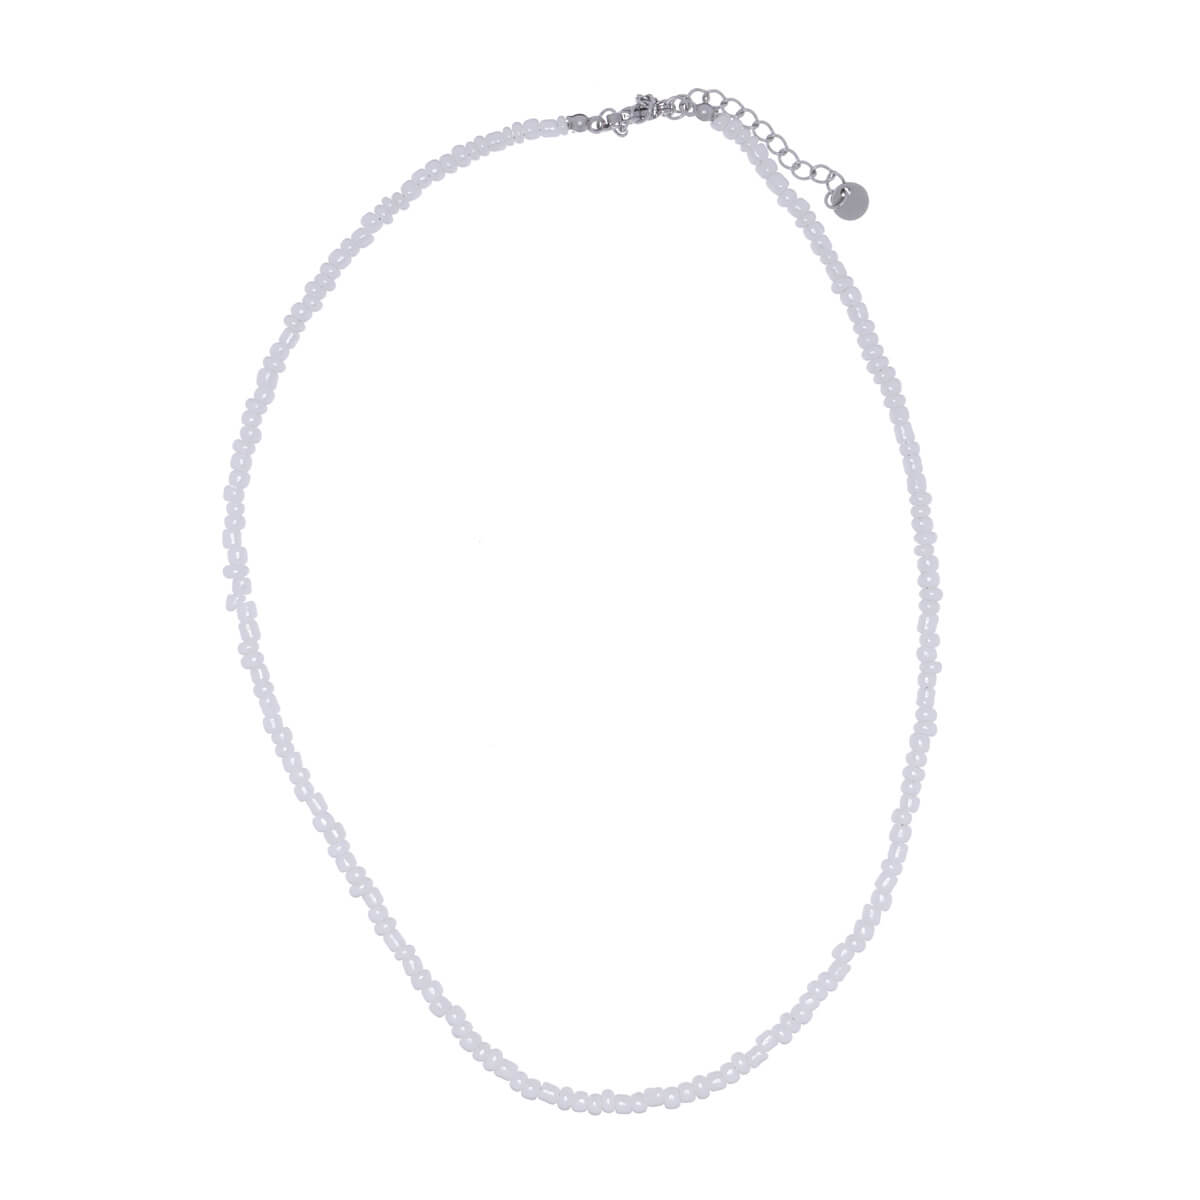 Tunn nackpärlor halsband 40 cm +5 cm (stål 316L)